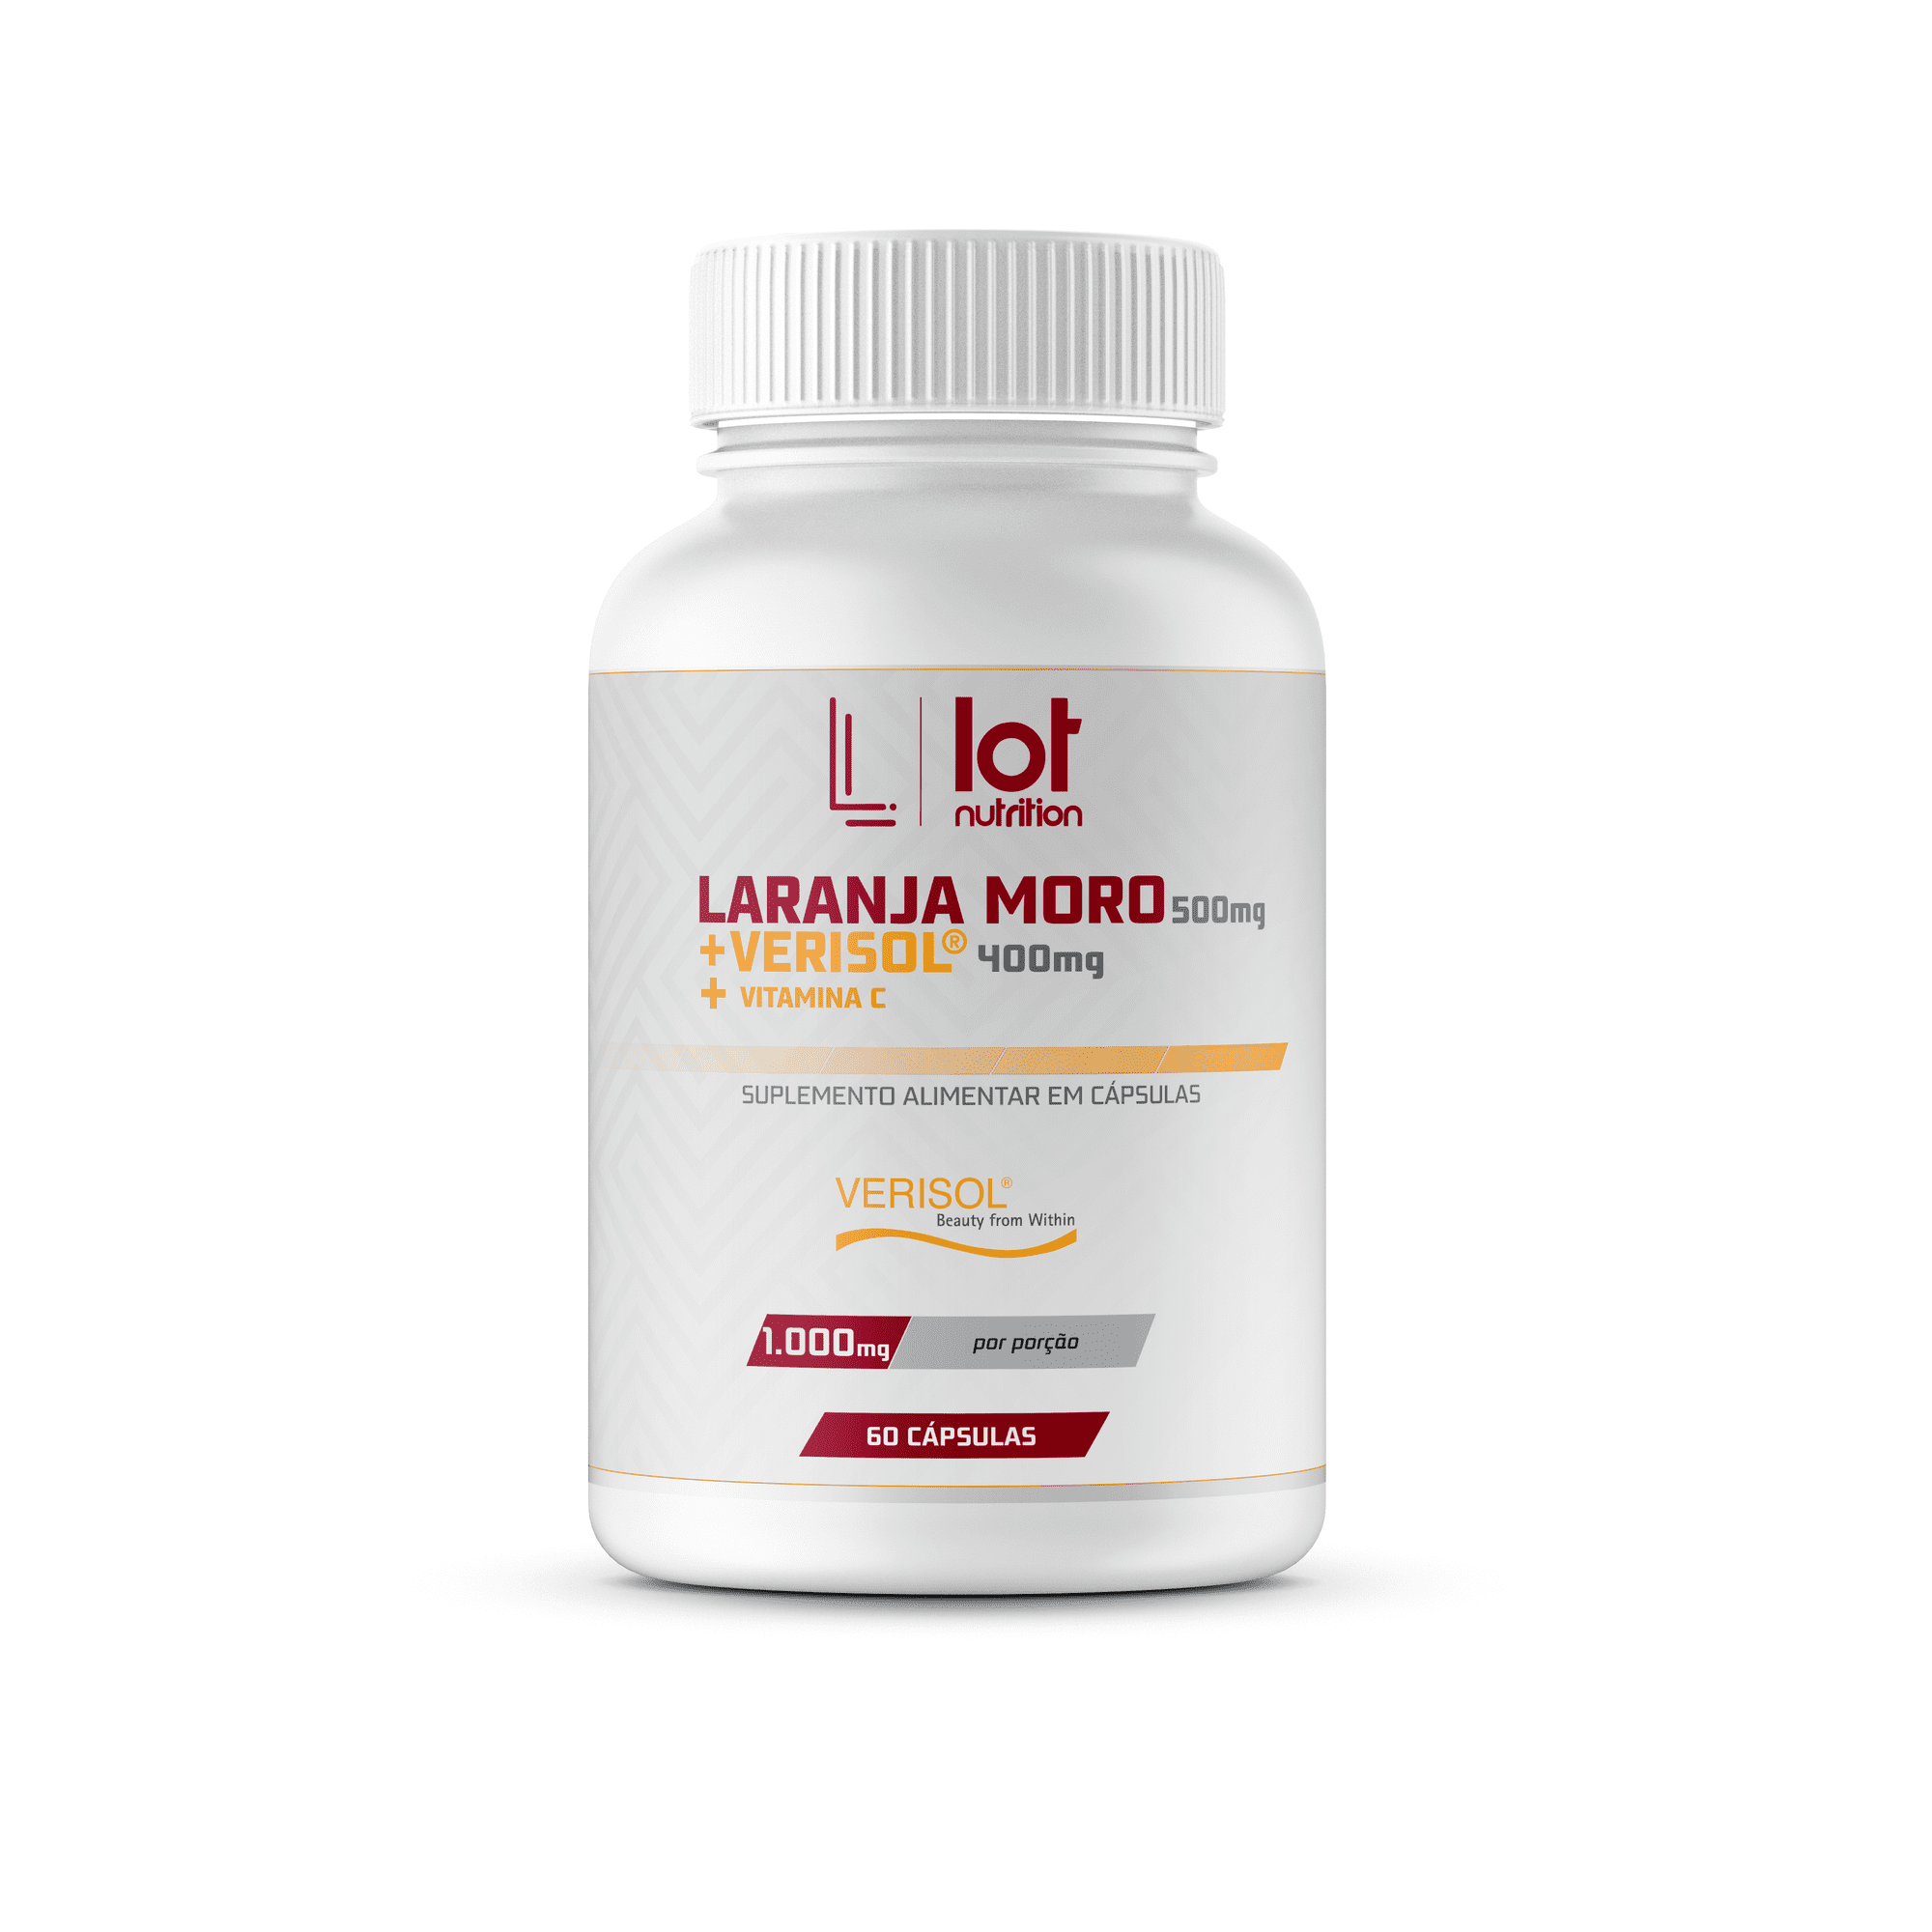 Laranja Moro 500mg + Verisol 400mg + Vitamina C 60 cápsulas Lot Nutrition